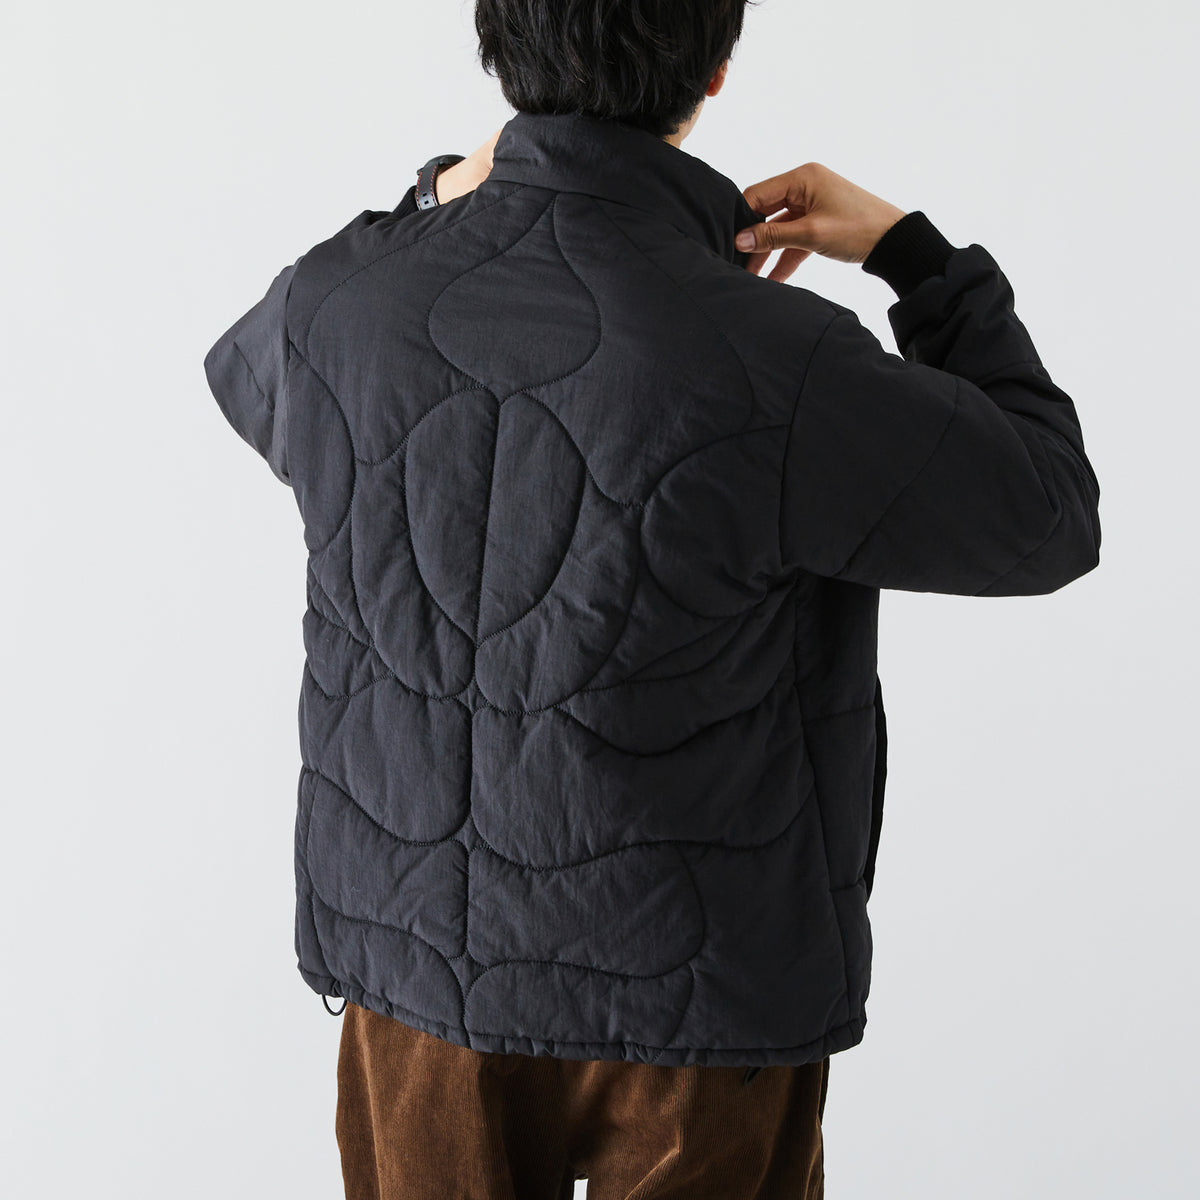 Yujiro Hanma Model Jacket Baki The Grappler – SuperGroupies USA